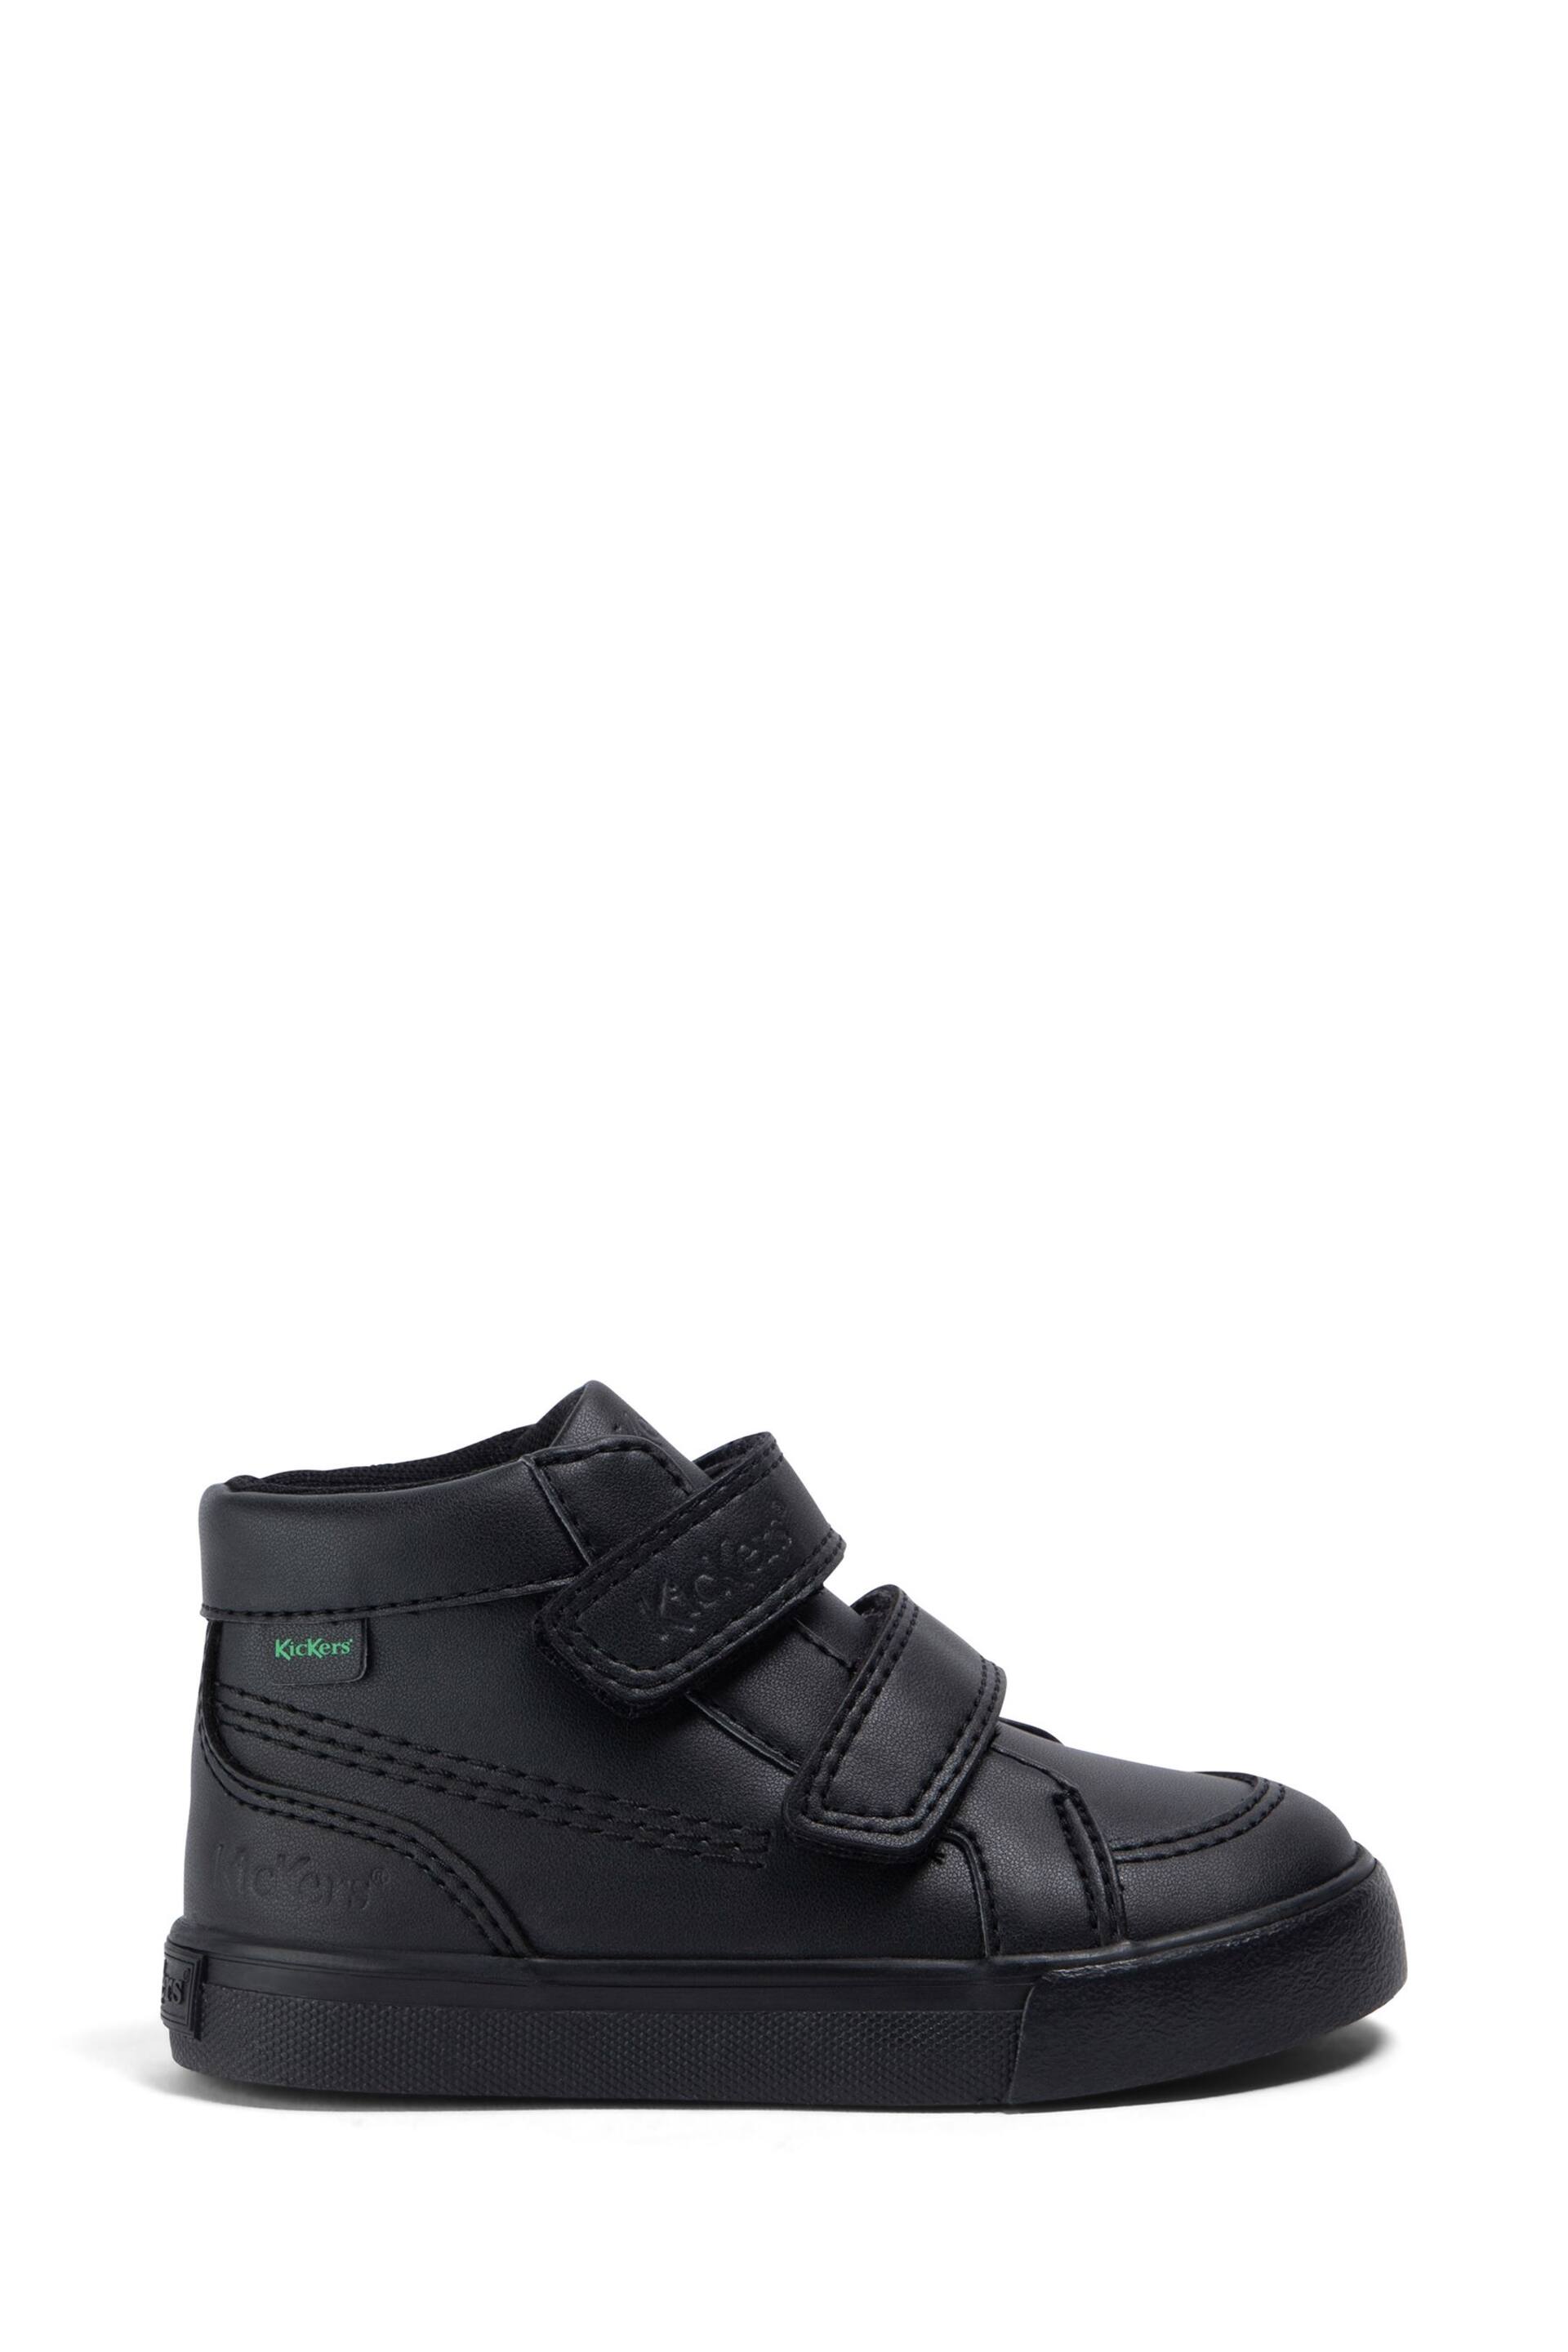 Kickers Infant Unisex Tovni Hi Vel Vegan Black Shoes - Image 1 of 6